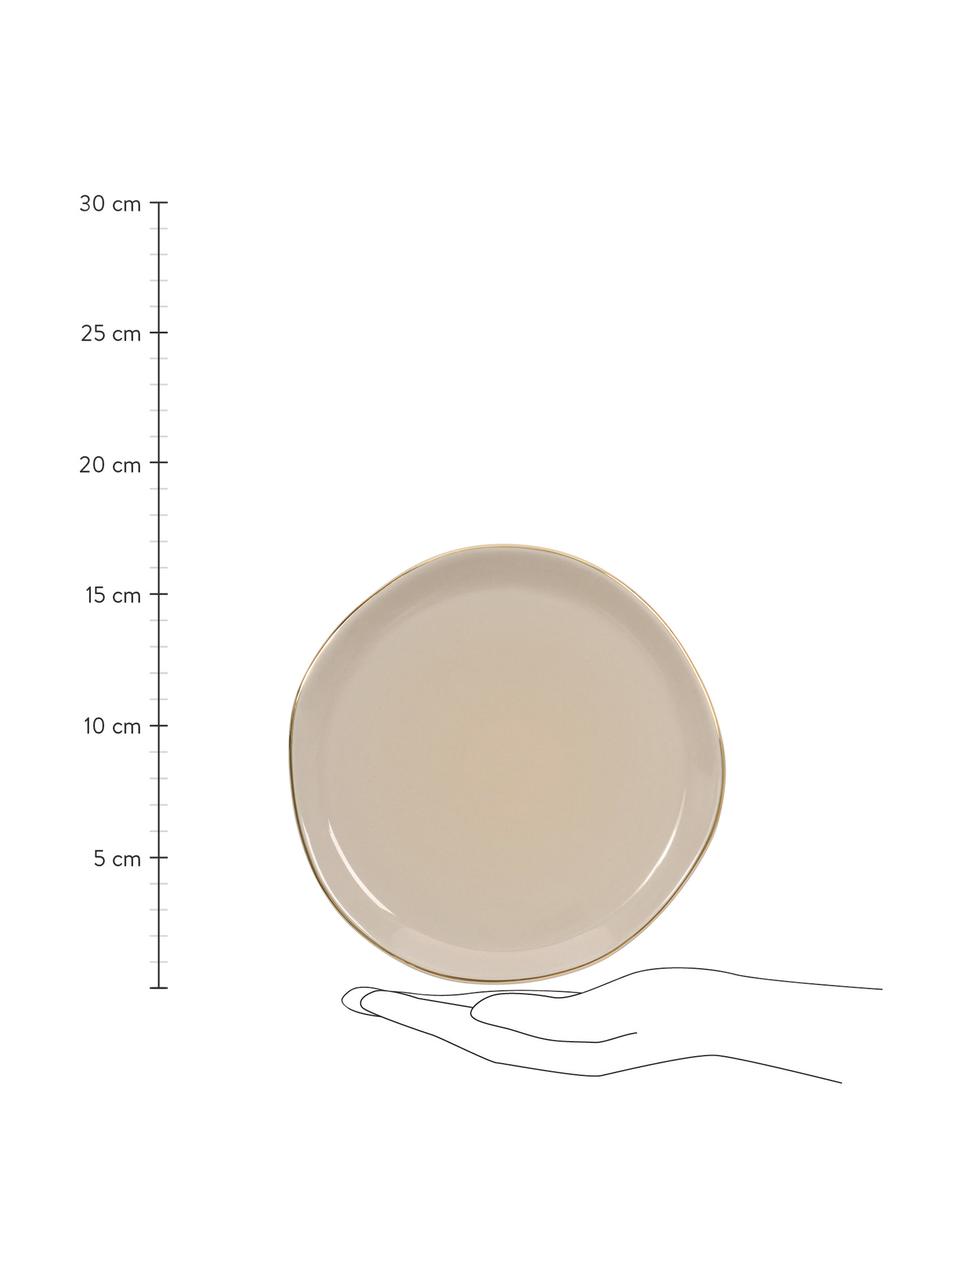 Good Morning broodbord in grijs met gouden rand, Ø 17 cm, Keramiek, Grijs, goudkleurig, Ø 17 cm